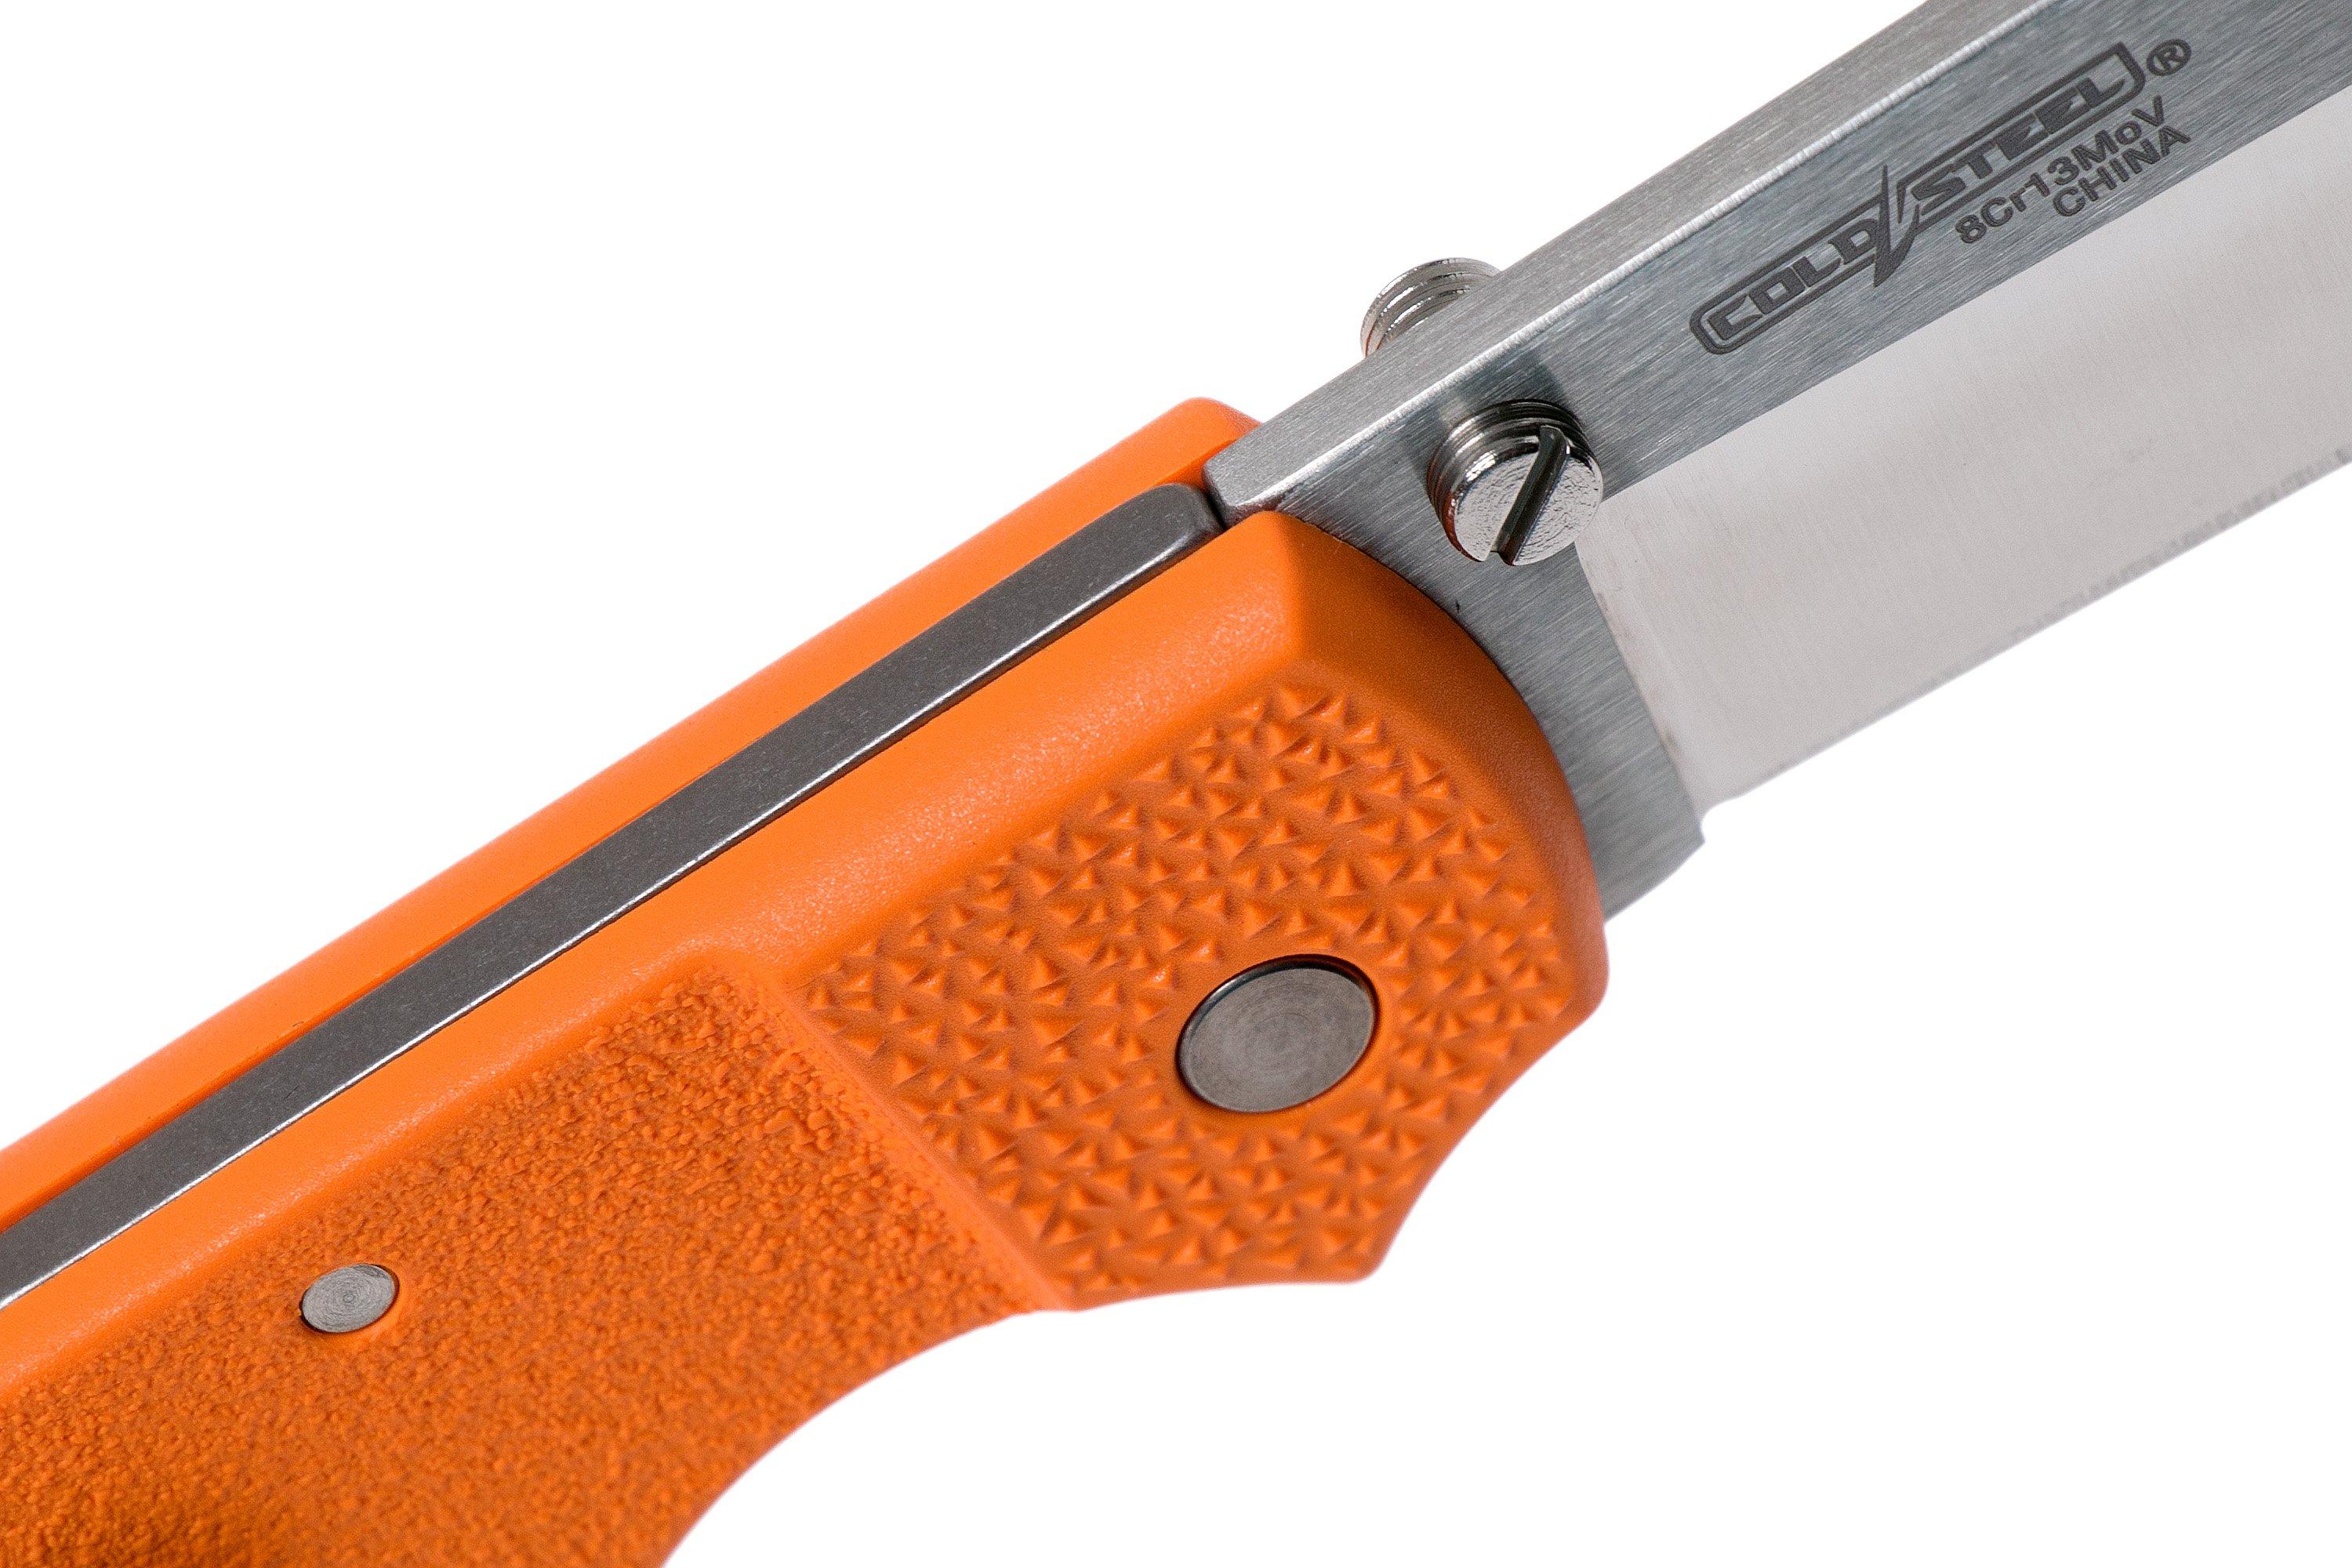 cold-steel-double-safe-hunter-23jb-orange-hunting-knife-advantageously-shopping-at